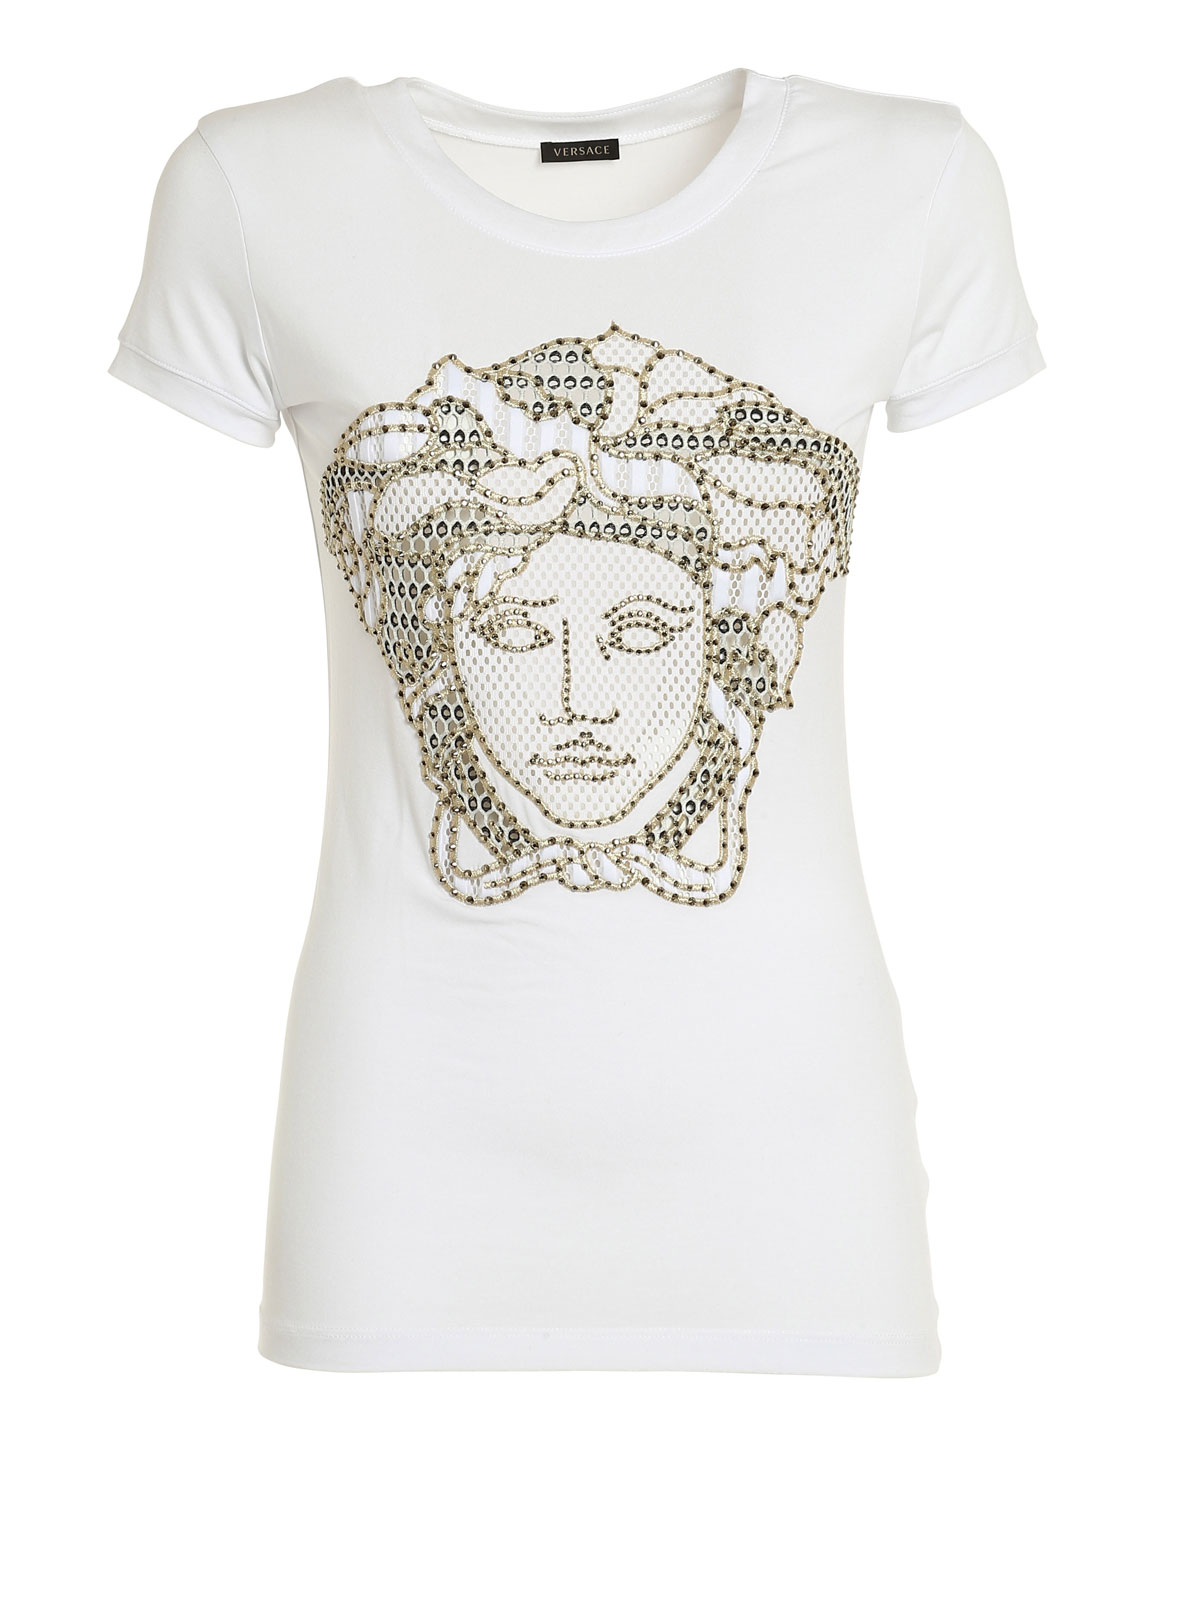 Camisetas Versace Camiseta Blanca Mujer - A71695A213311A1001